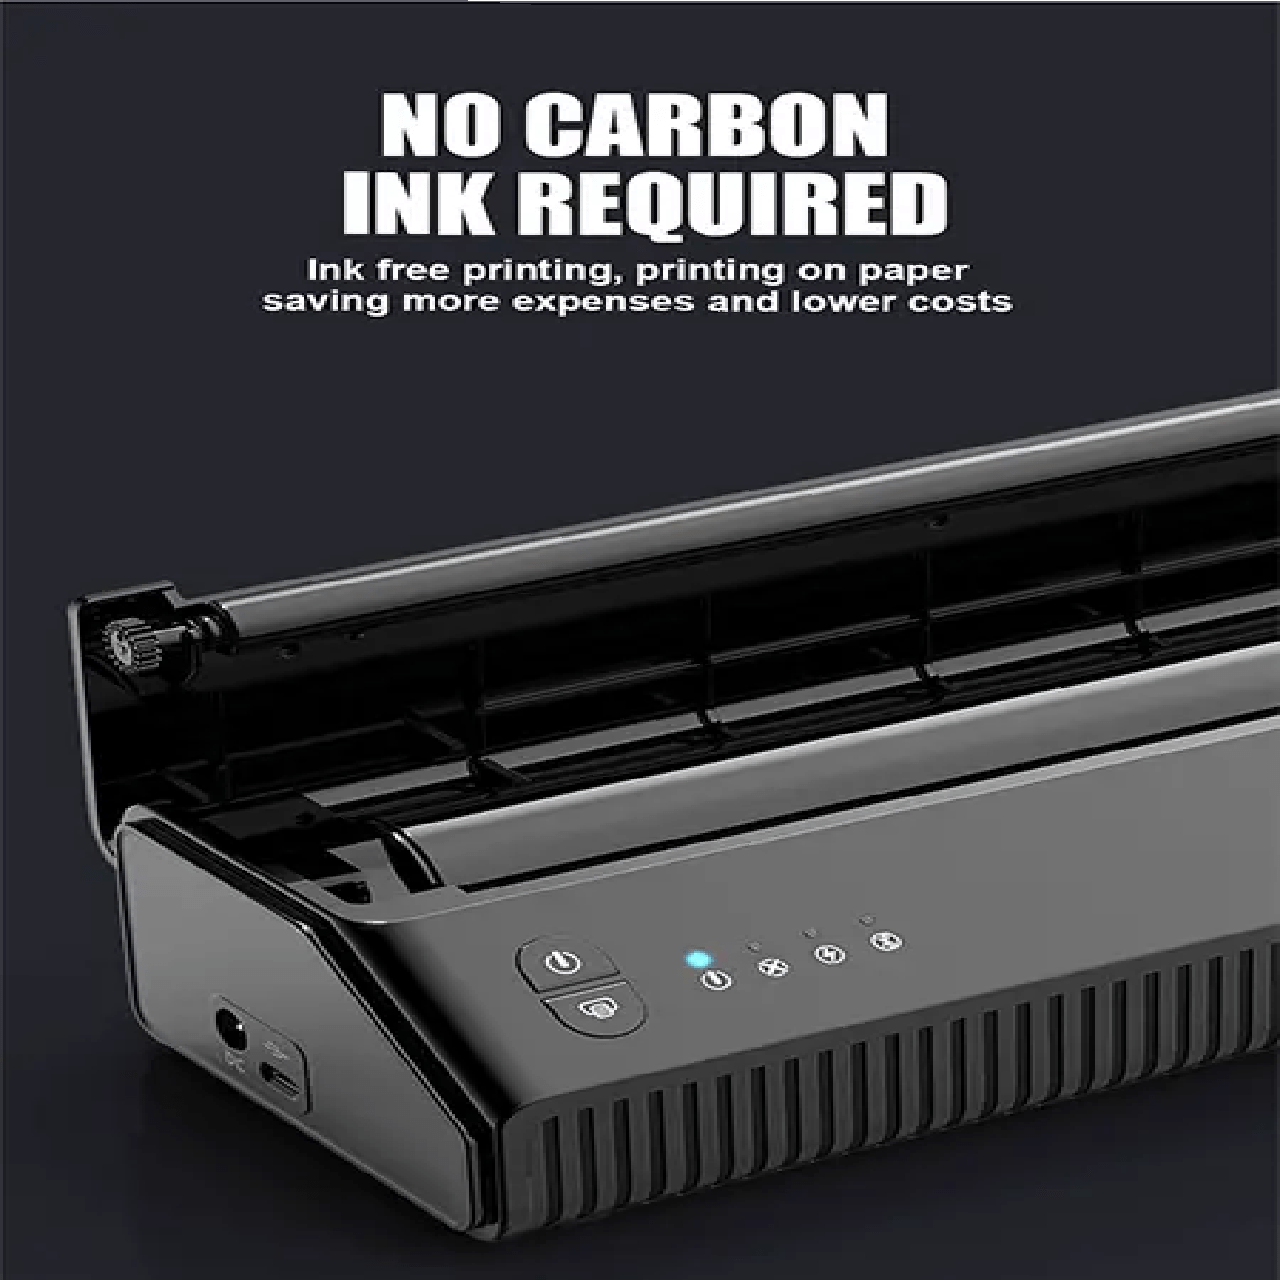 Buy Tattoo Stencil Printer Ink For Inkjet Printer( 10 Piece